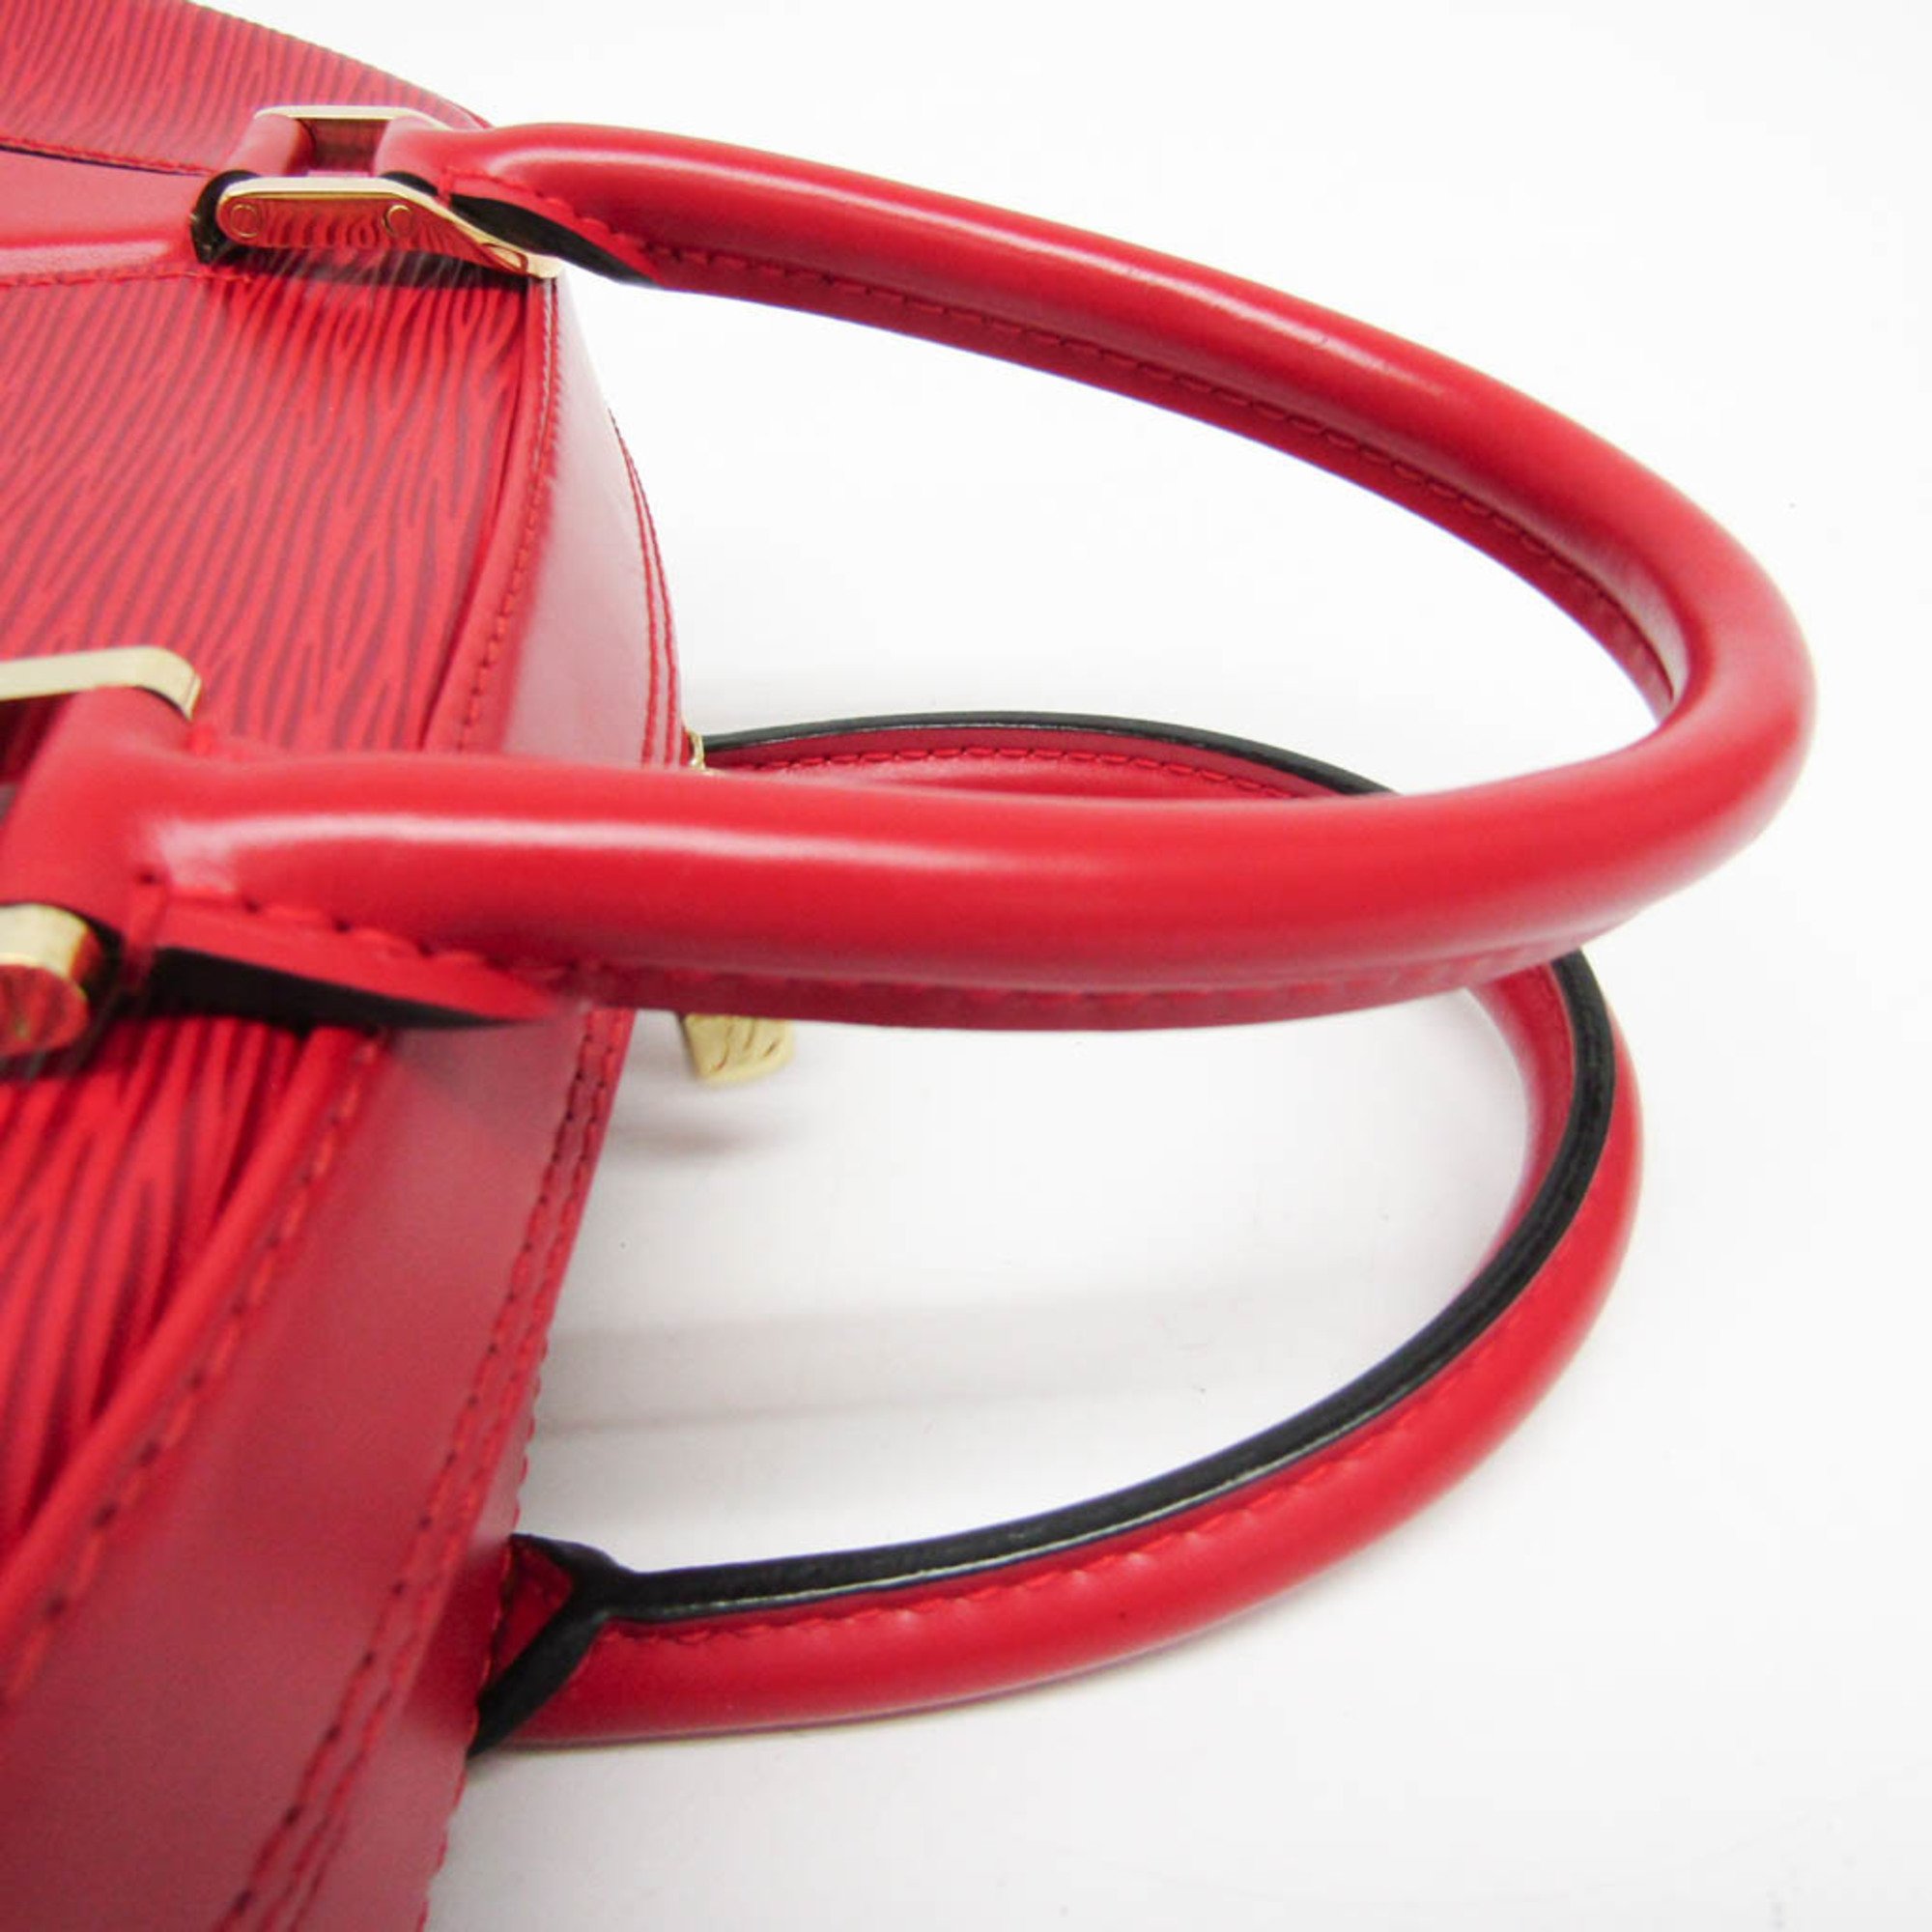 Louis Vuitton Epi Sablon M52047 Women's Handbag Castilian Red